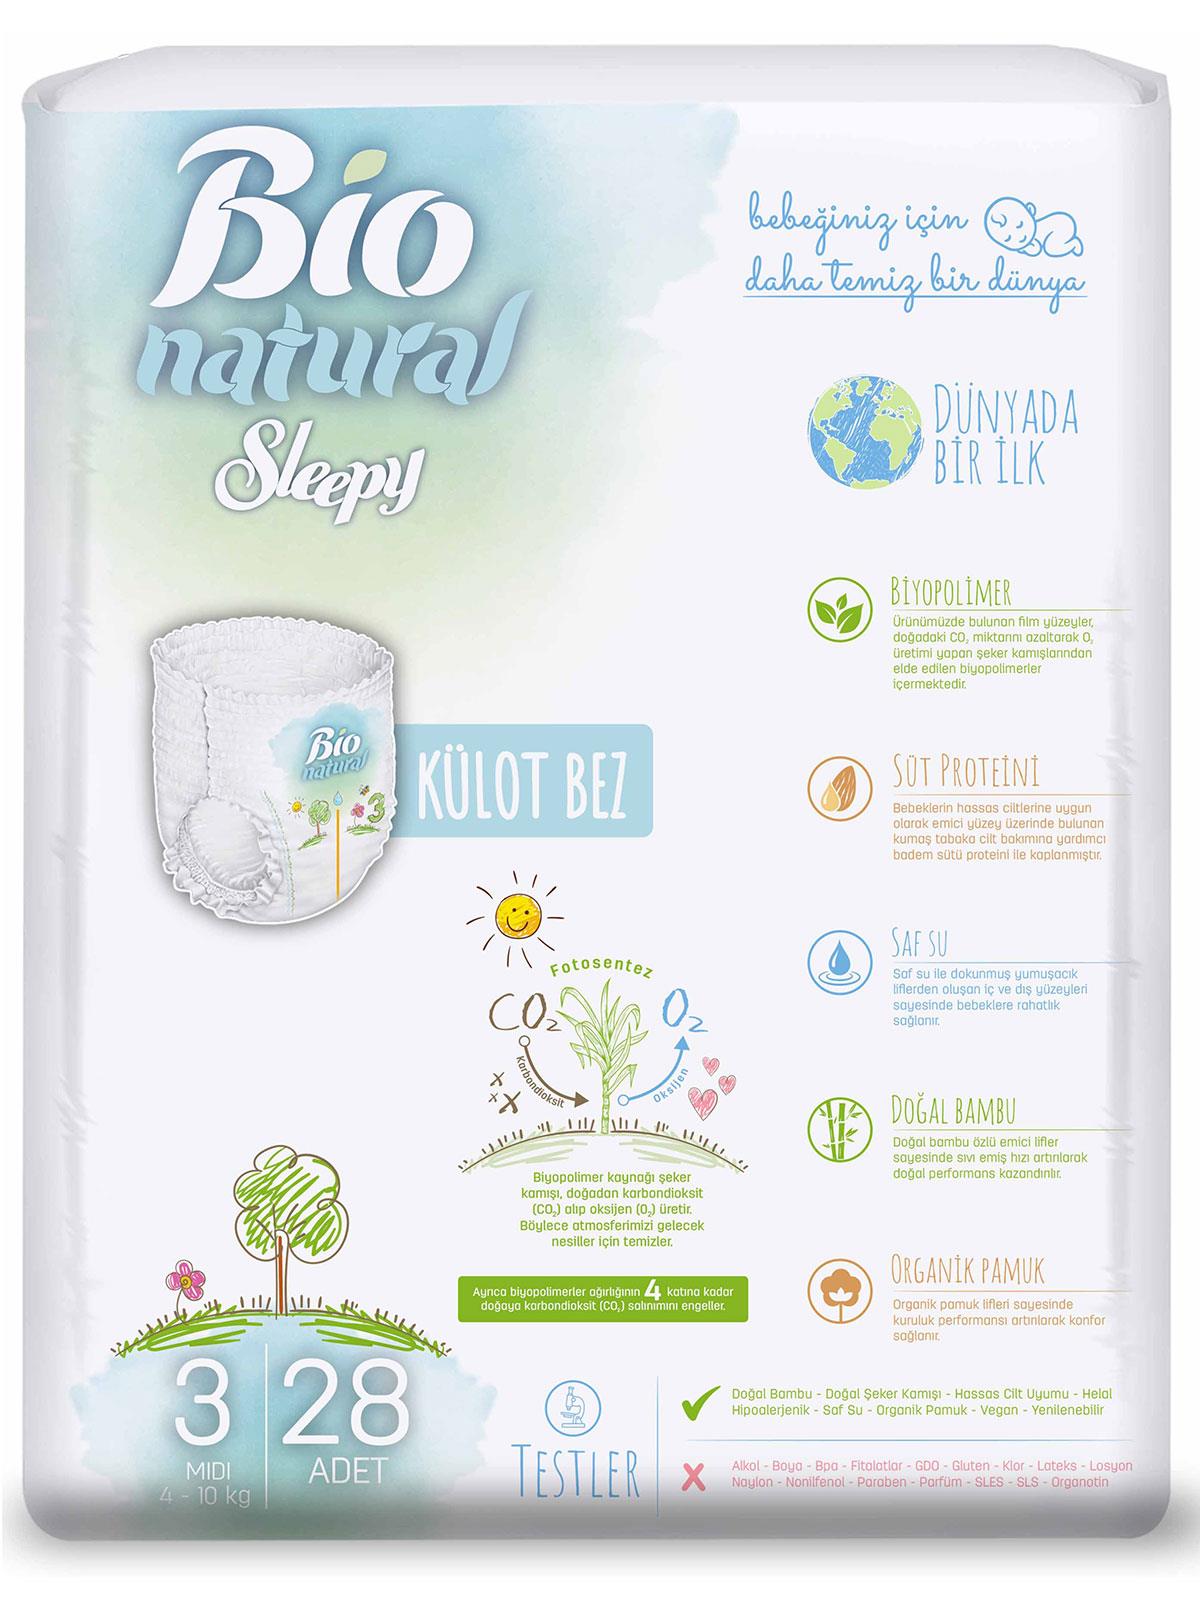 Sleepy Bio Natural Külot Bez 3 Numara Midi 4-10 kg 28 Adet